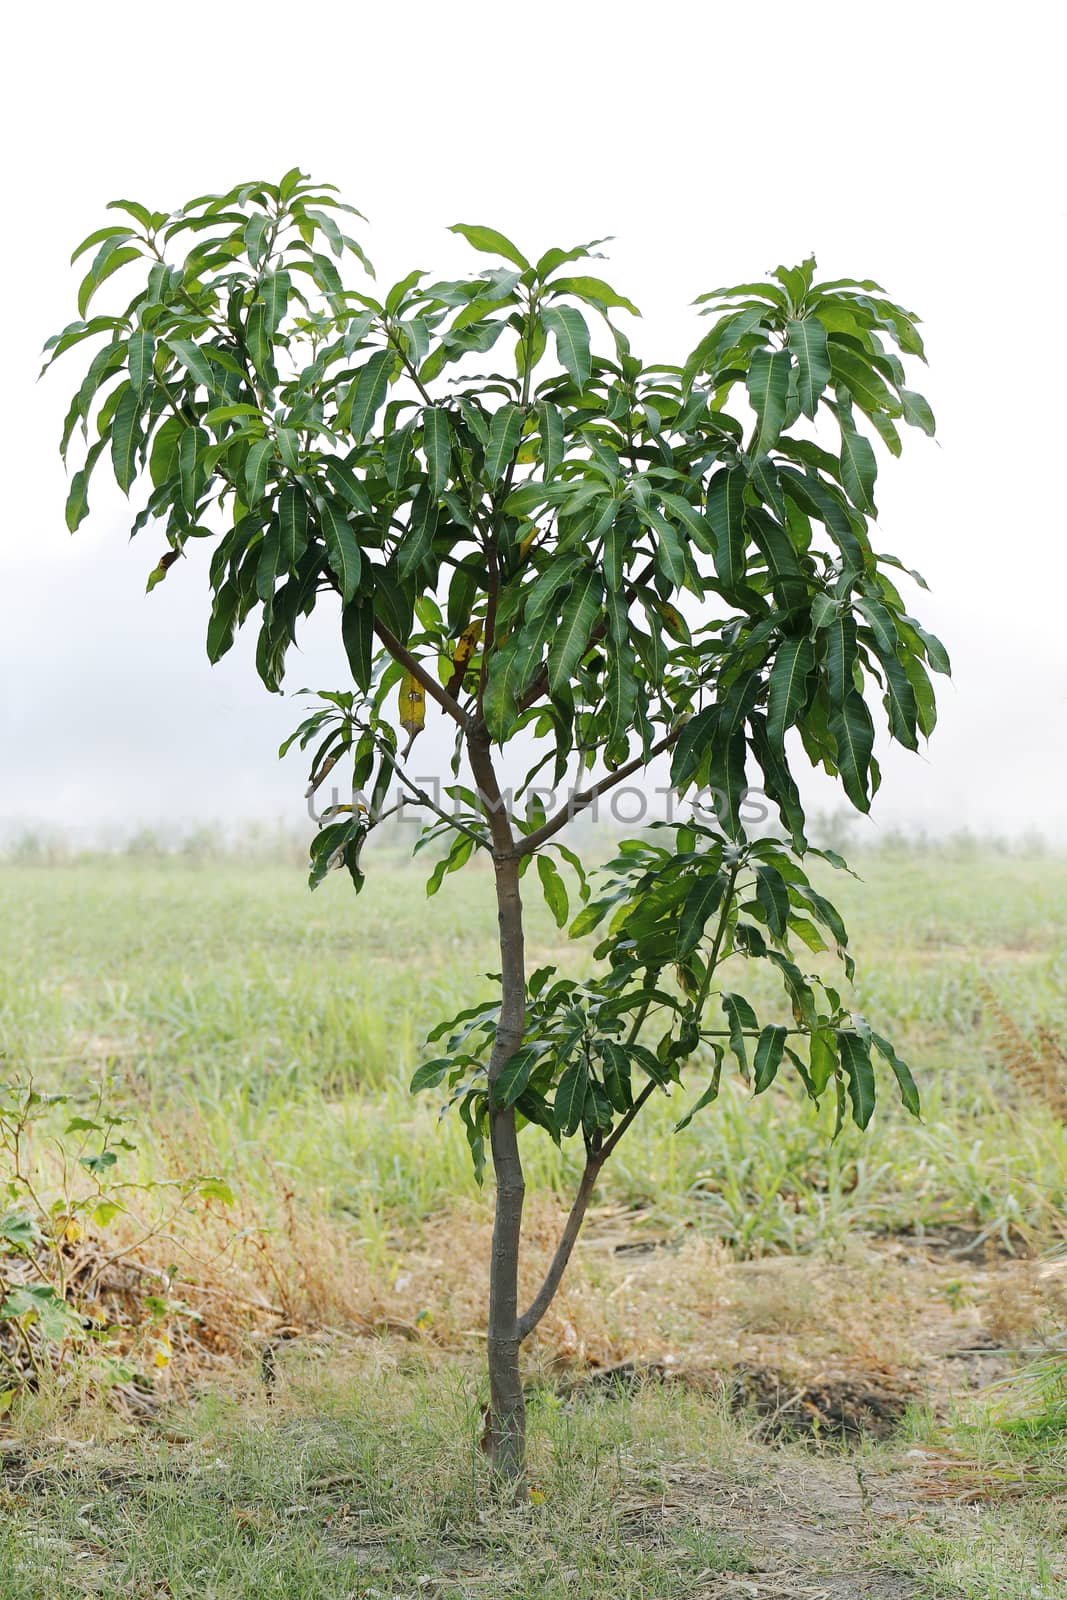 Small mango tree, Mango seedlings, Mango tree in farm